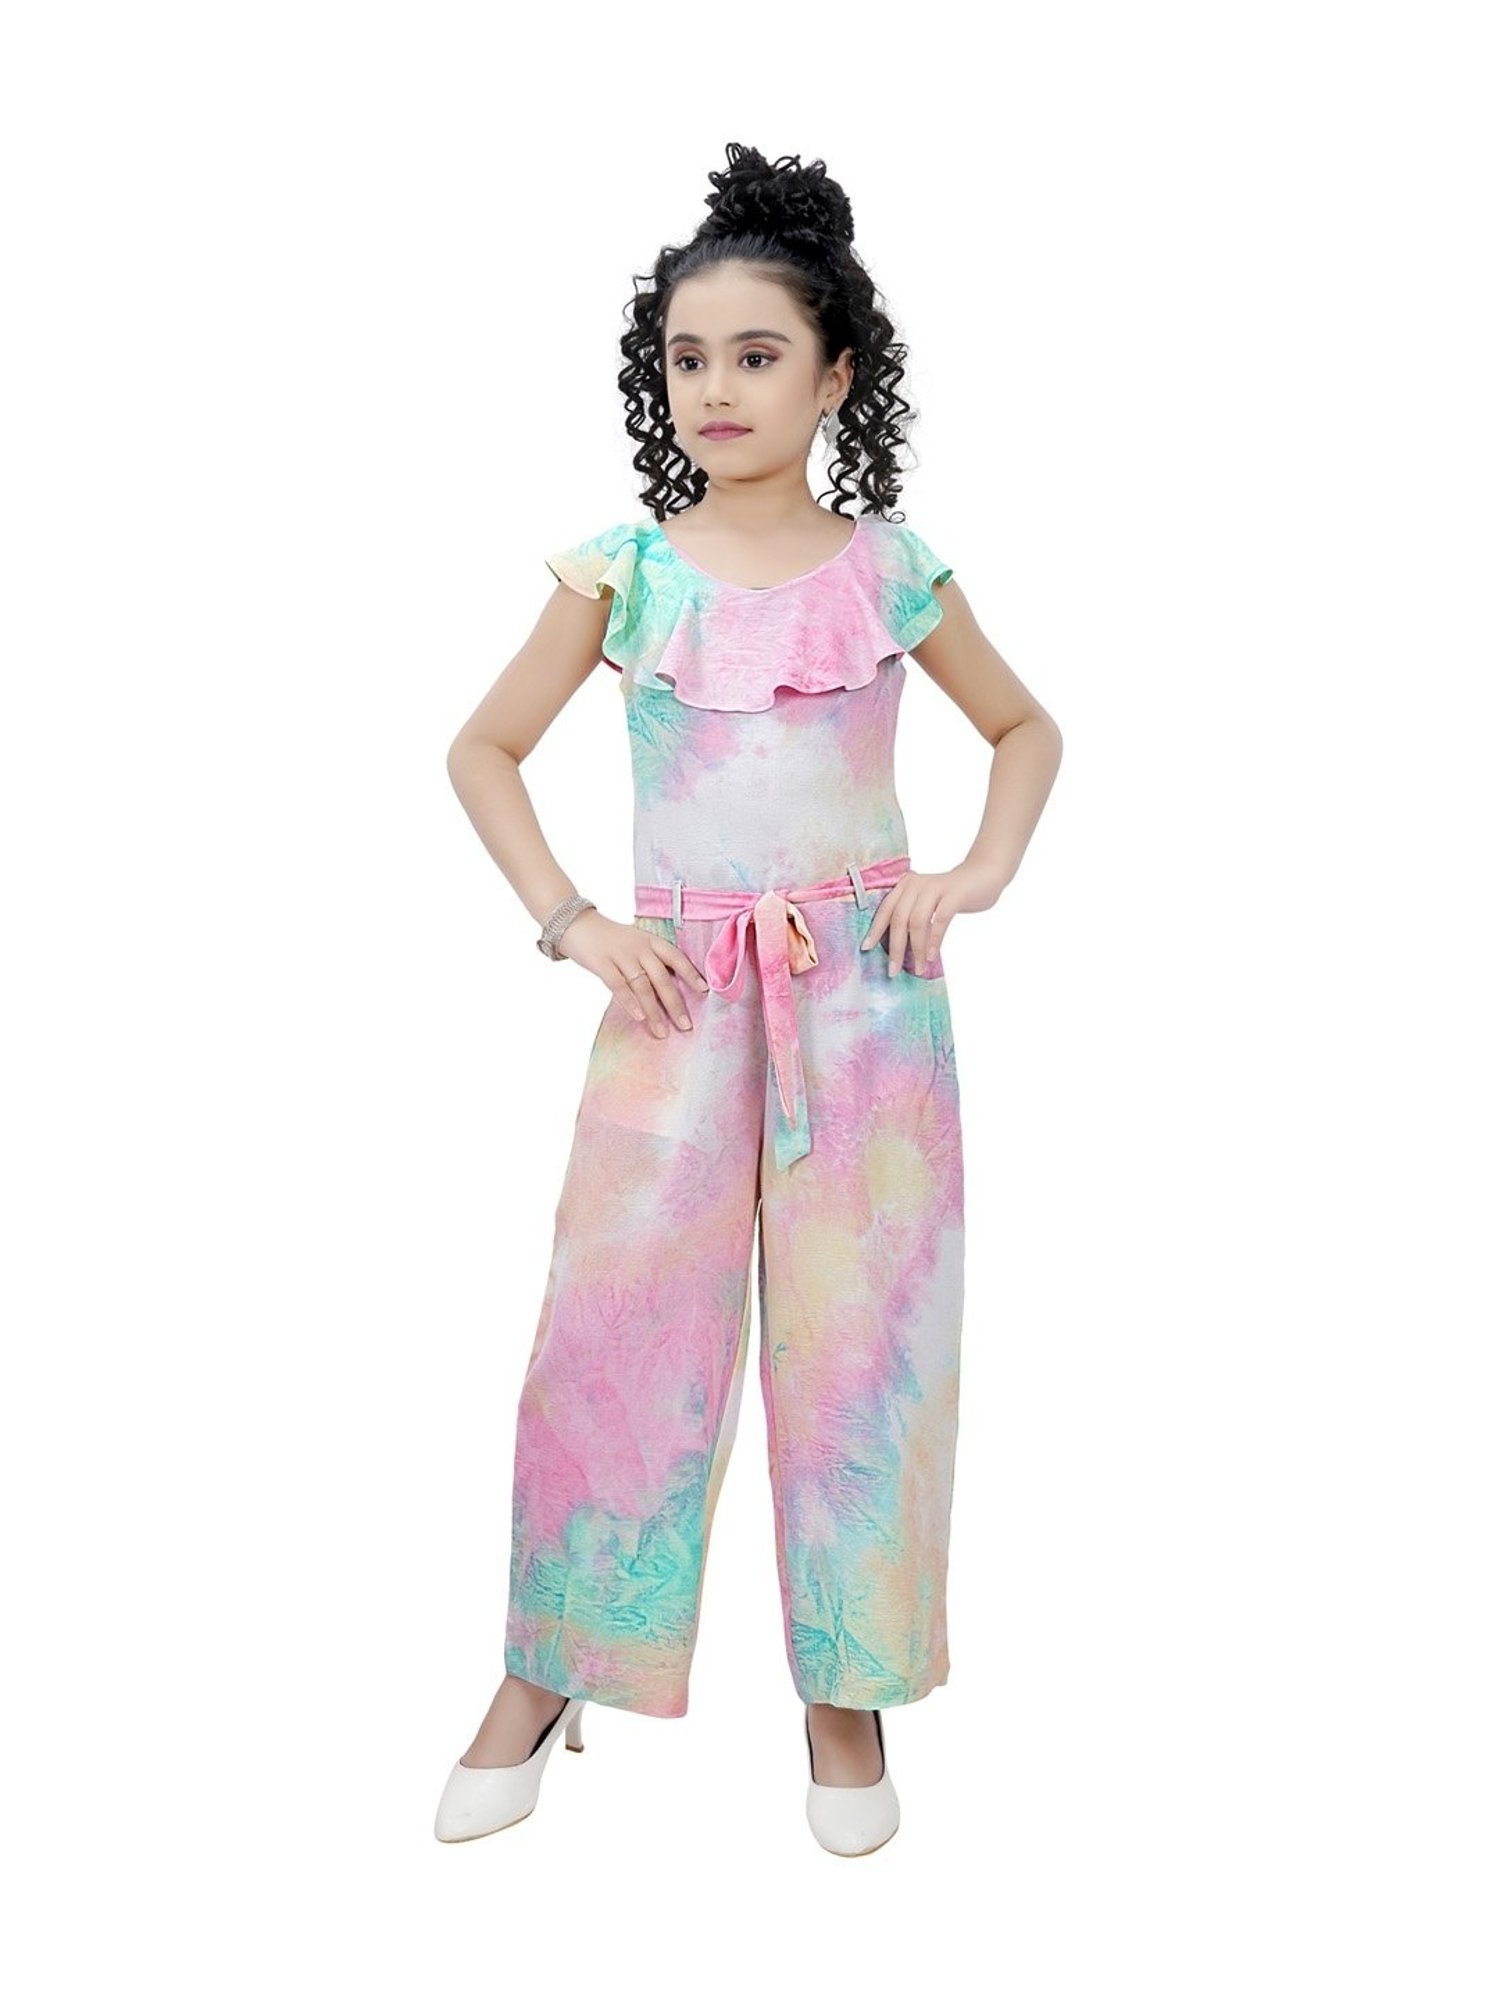 Floral Cream Colored Knee Length Dress  2225 Cream  TINY BABY INDIA